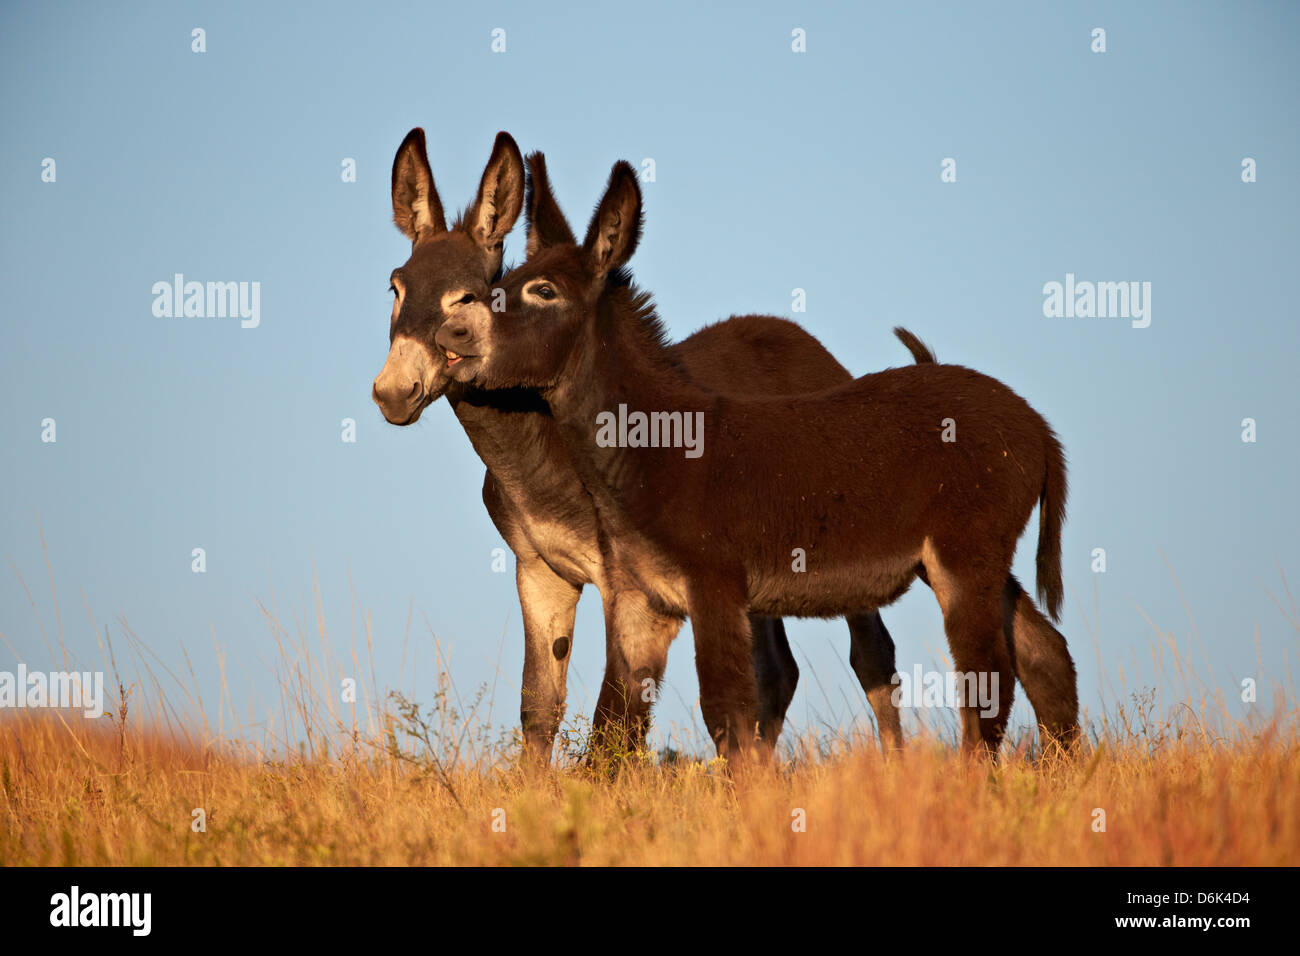 Two young wild burro (donkey) (Equus asinus) (Equus africanus asinus) playing, Custer State Park, South Dakota, USA Stock Photo